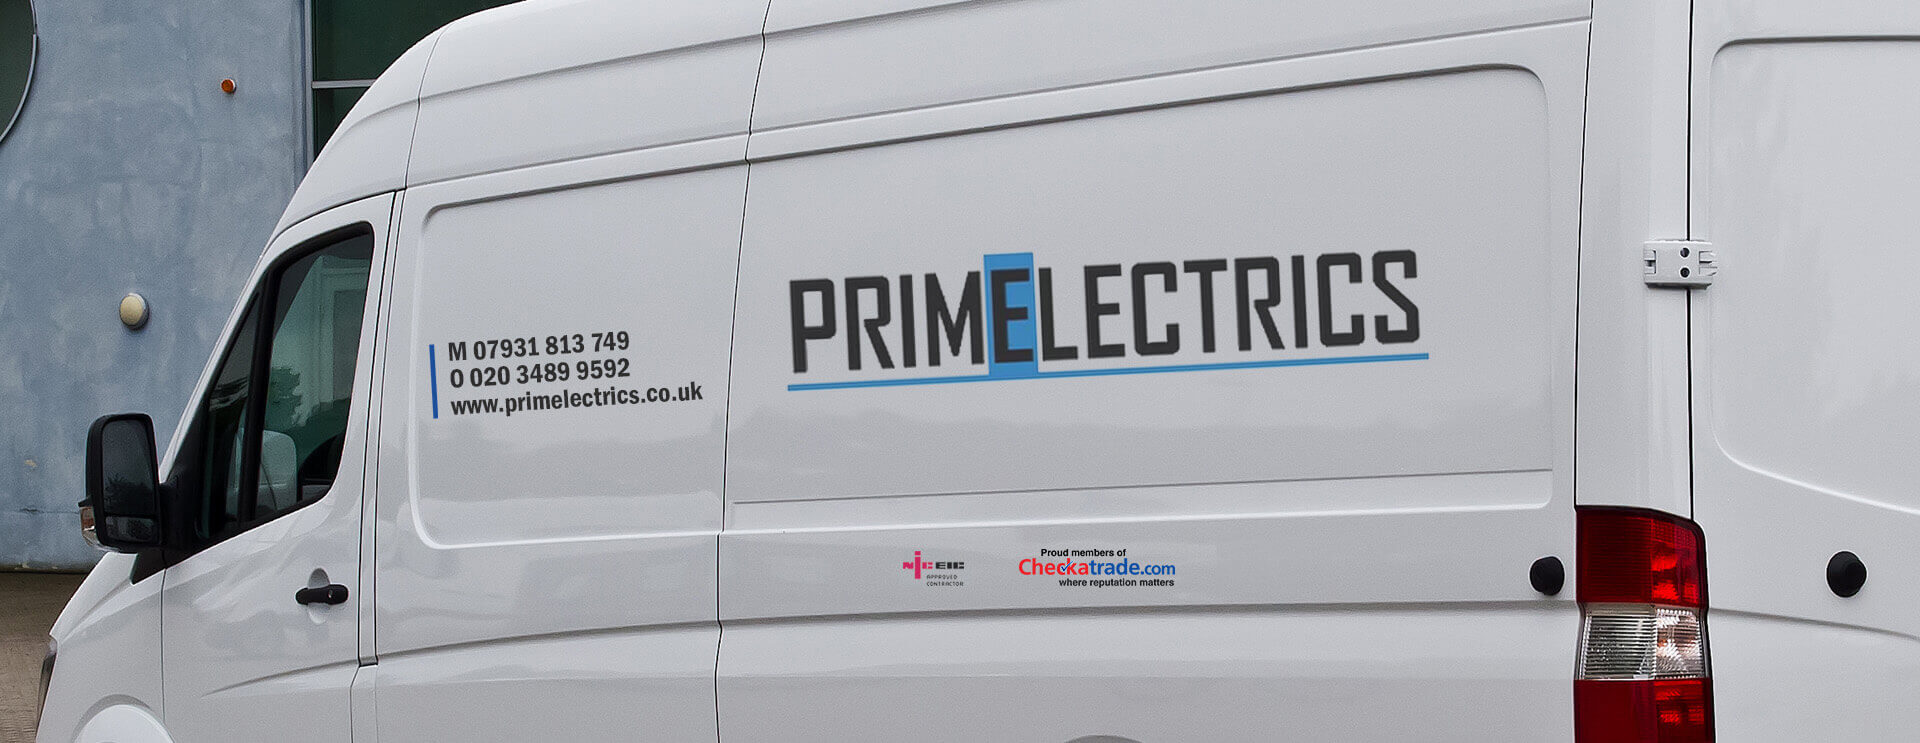 Primelectrics' mid-sized white van